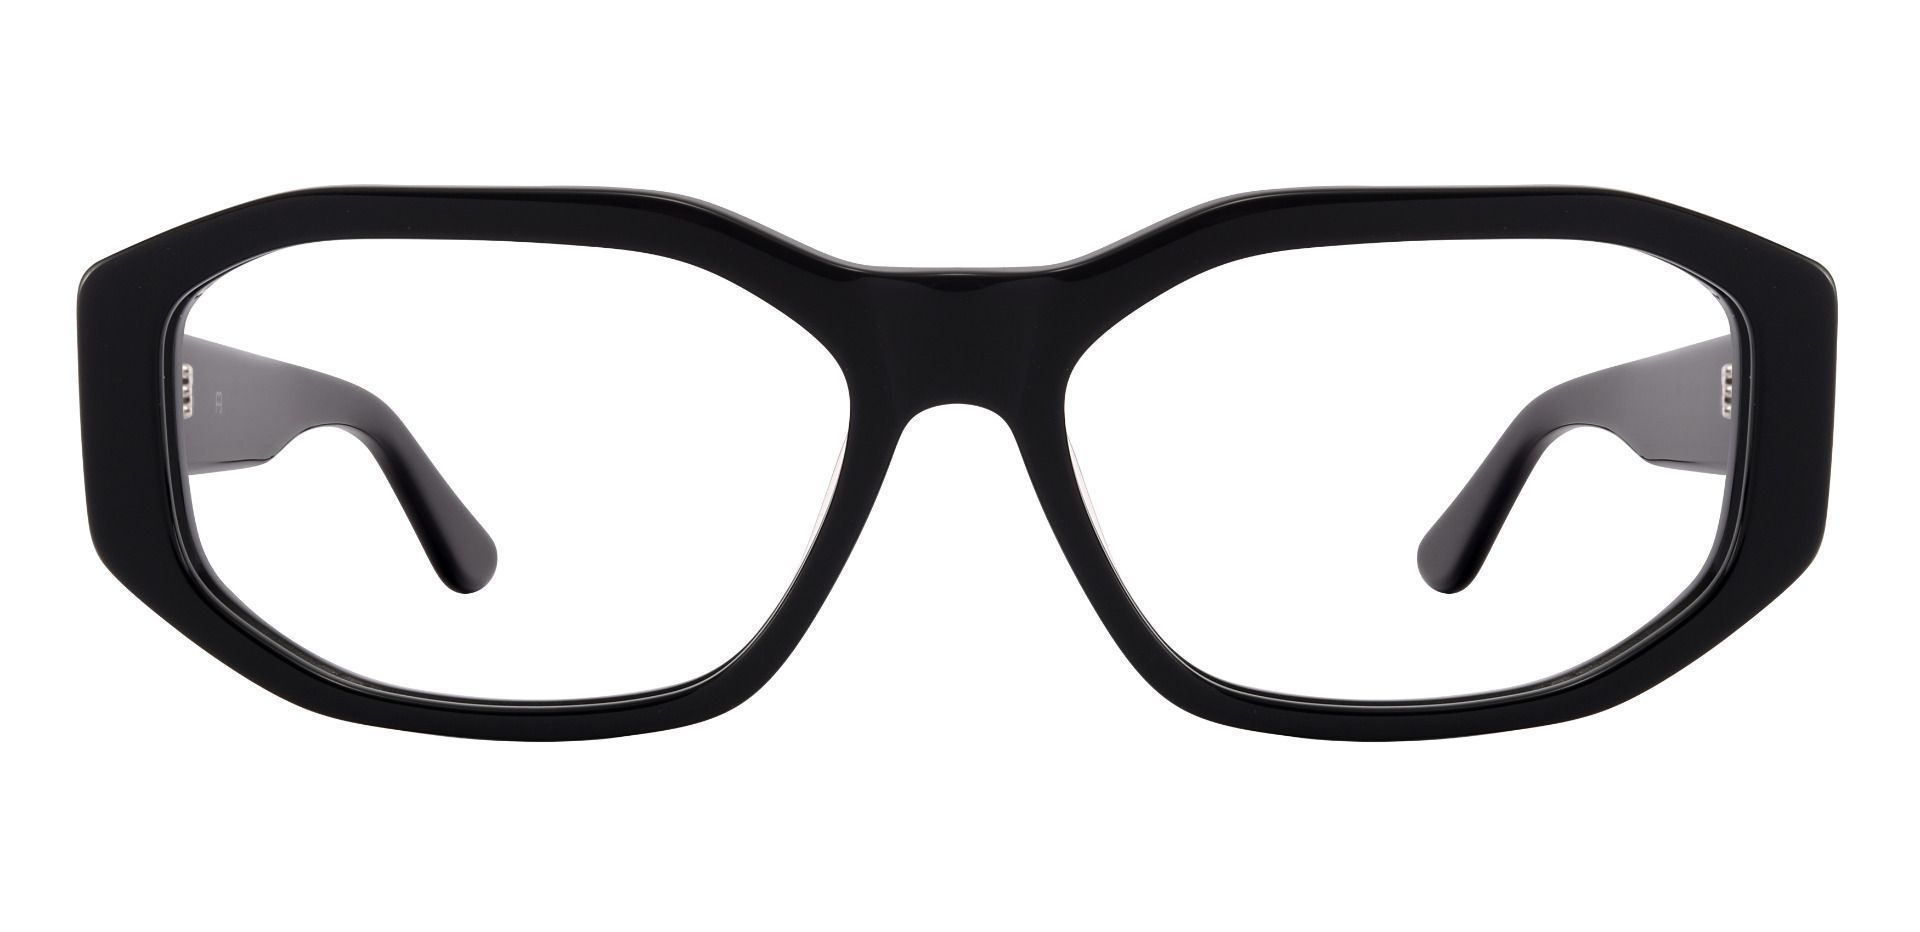 Sayre Rectangle Prescription Glasses - Black